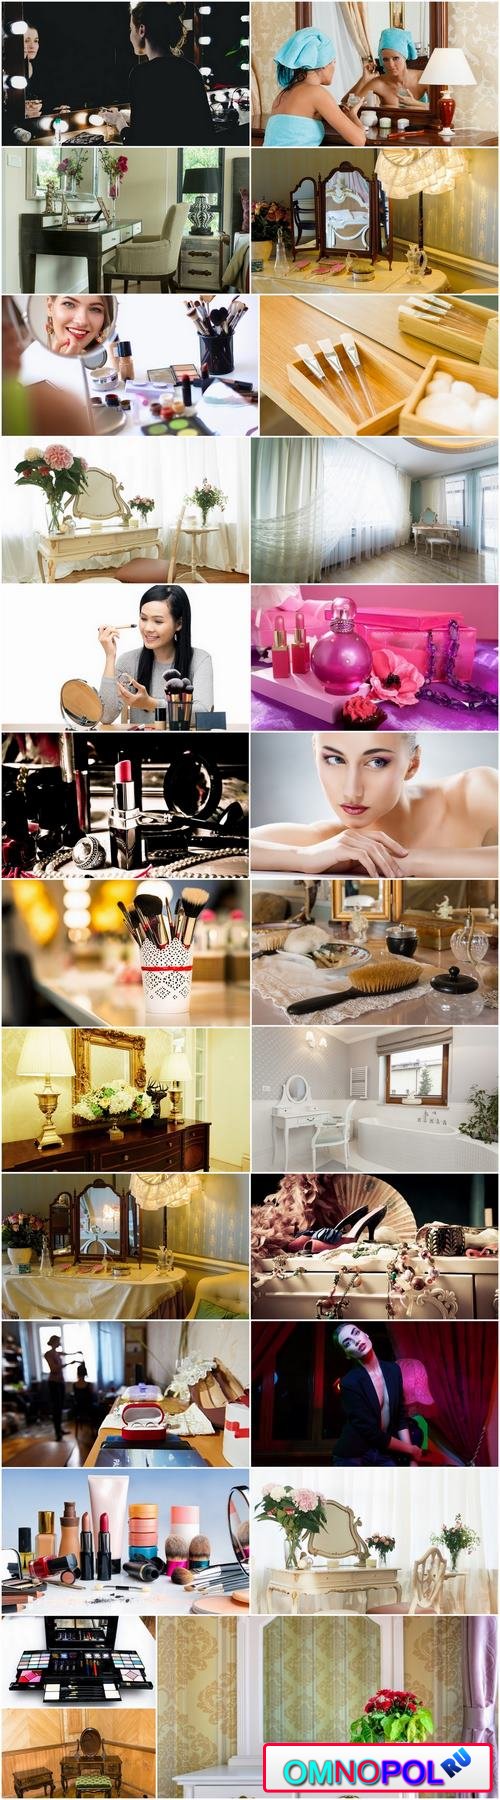 Makeup dressing table Beauty model woman perfumes 25 HQ Jpeg